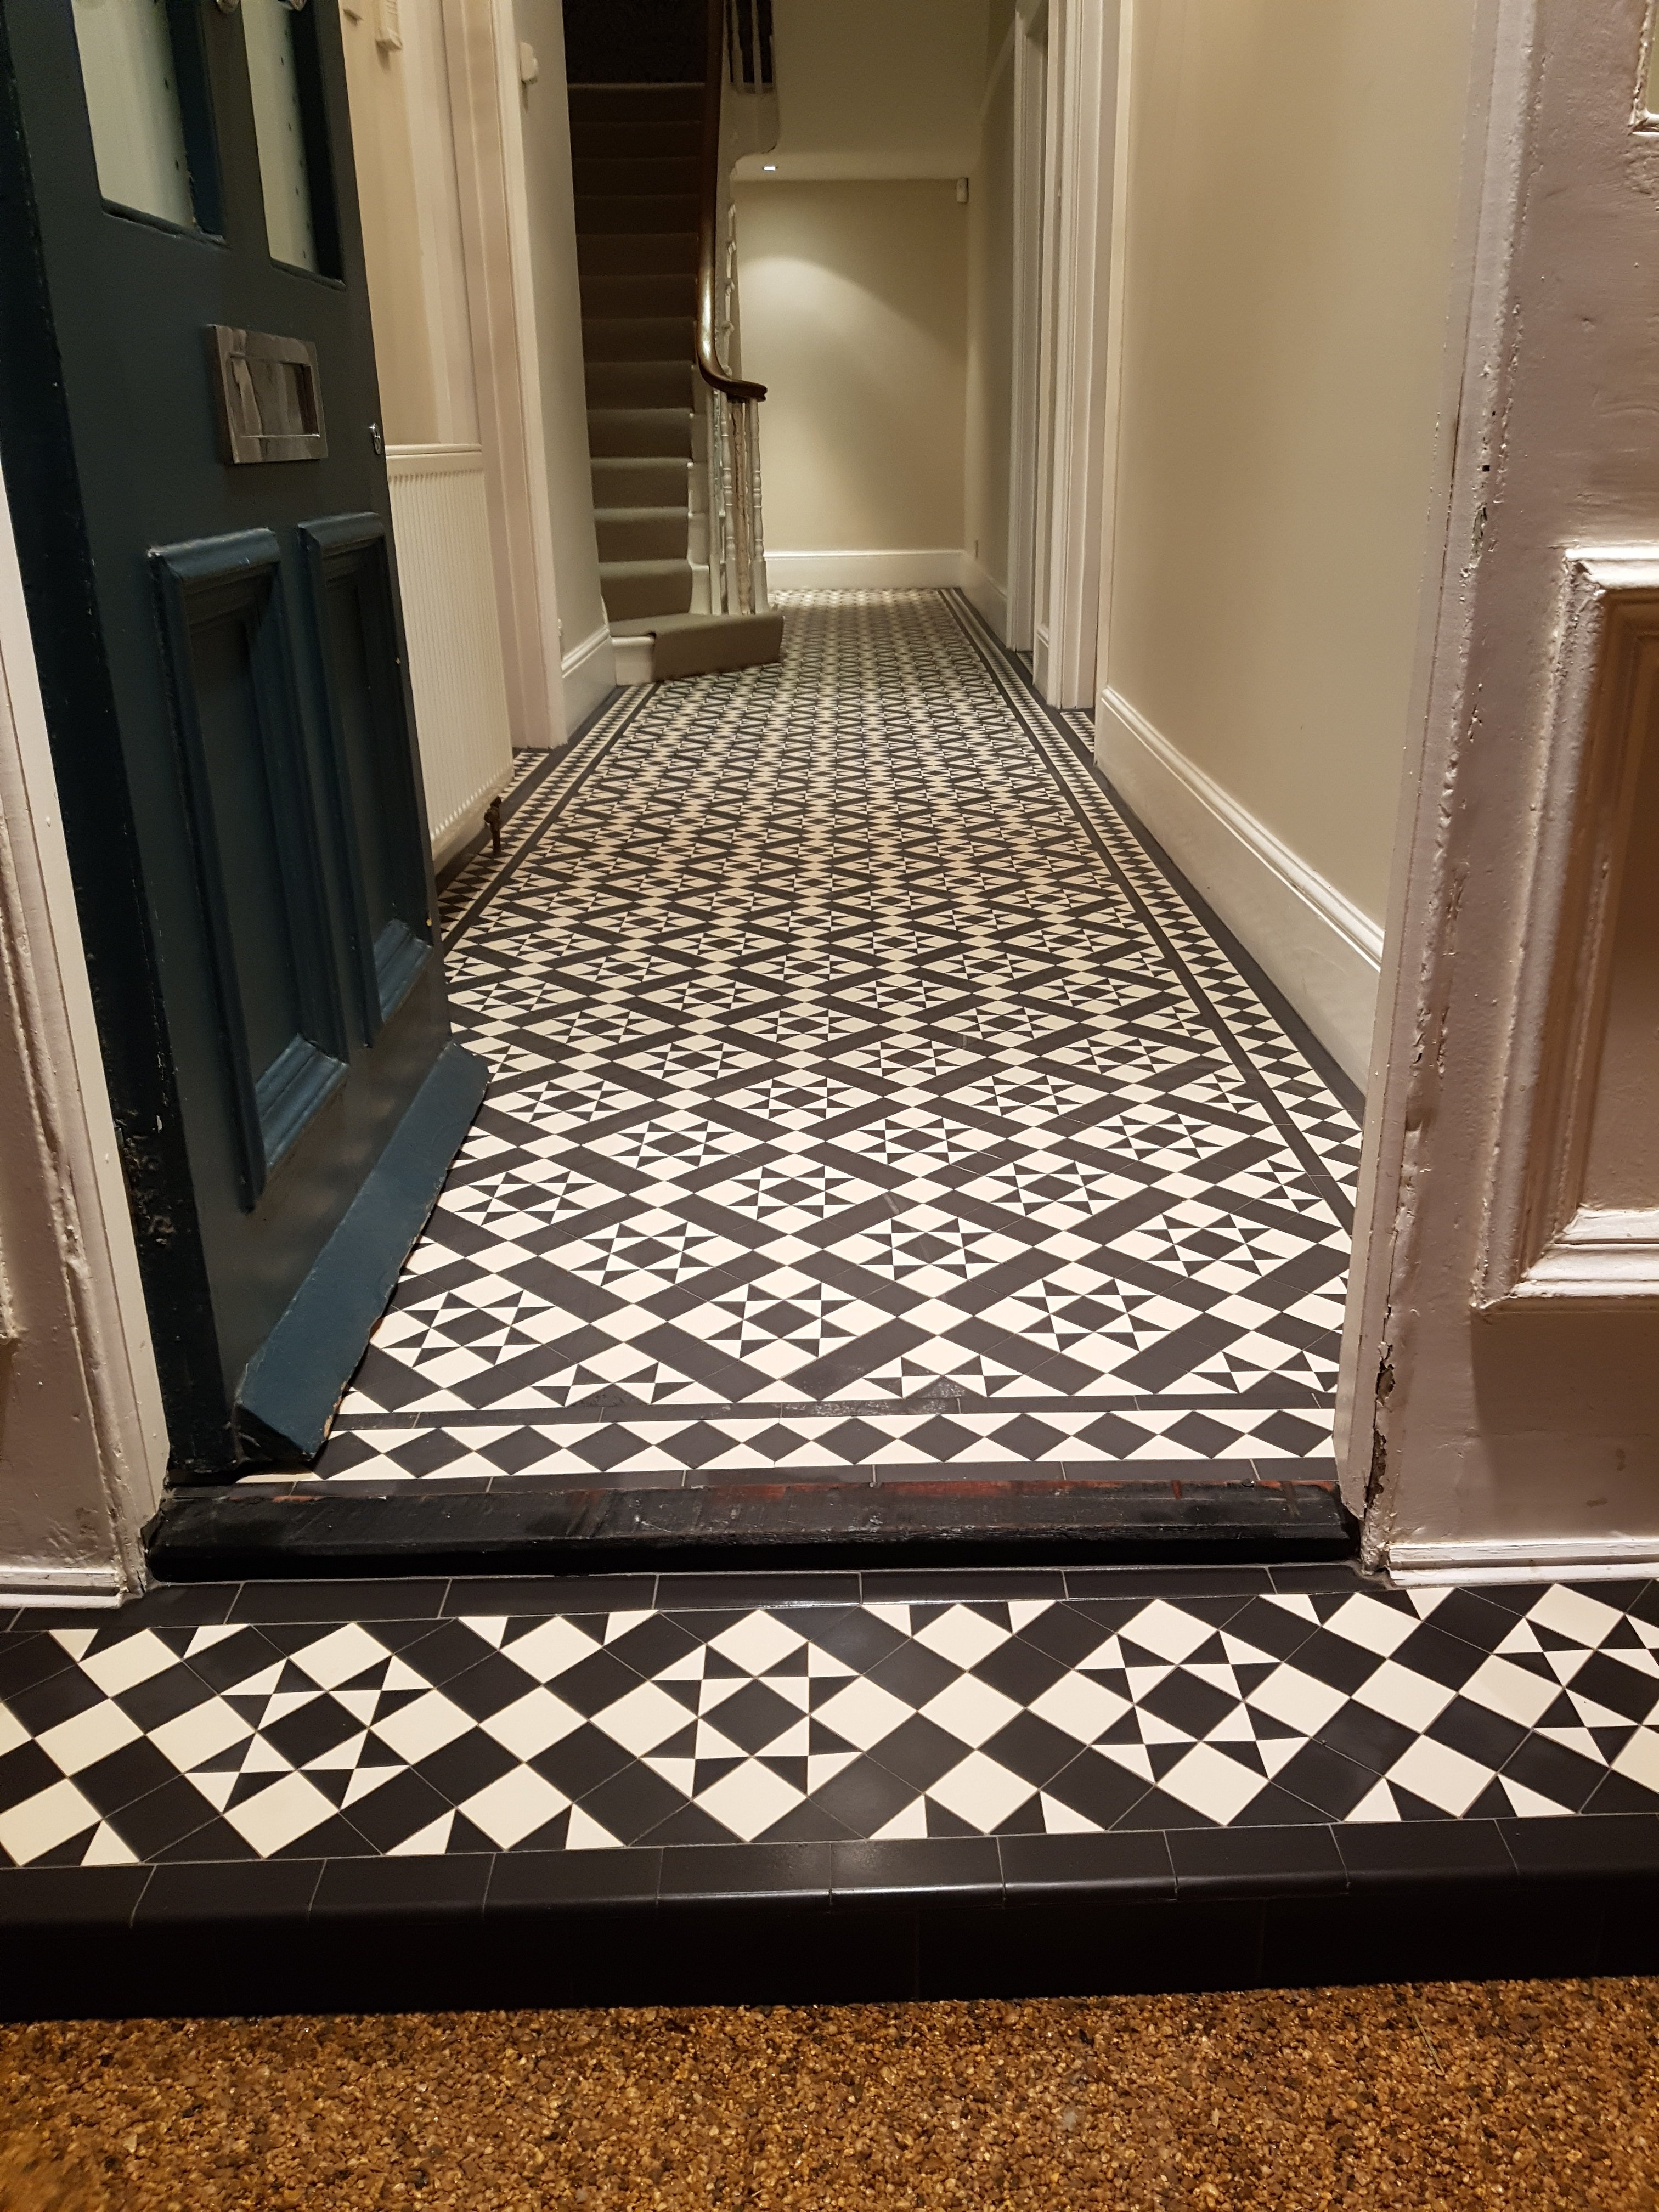 Hallway and step